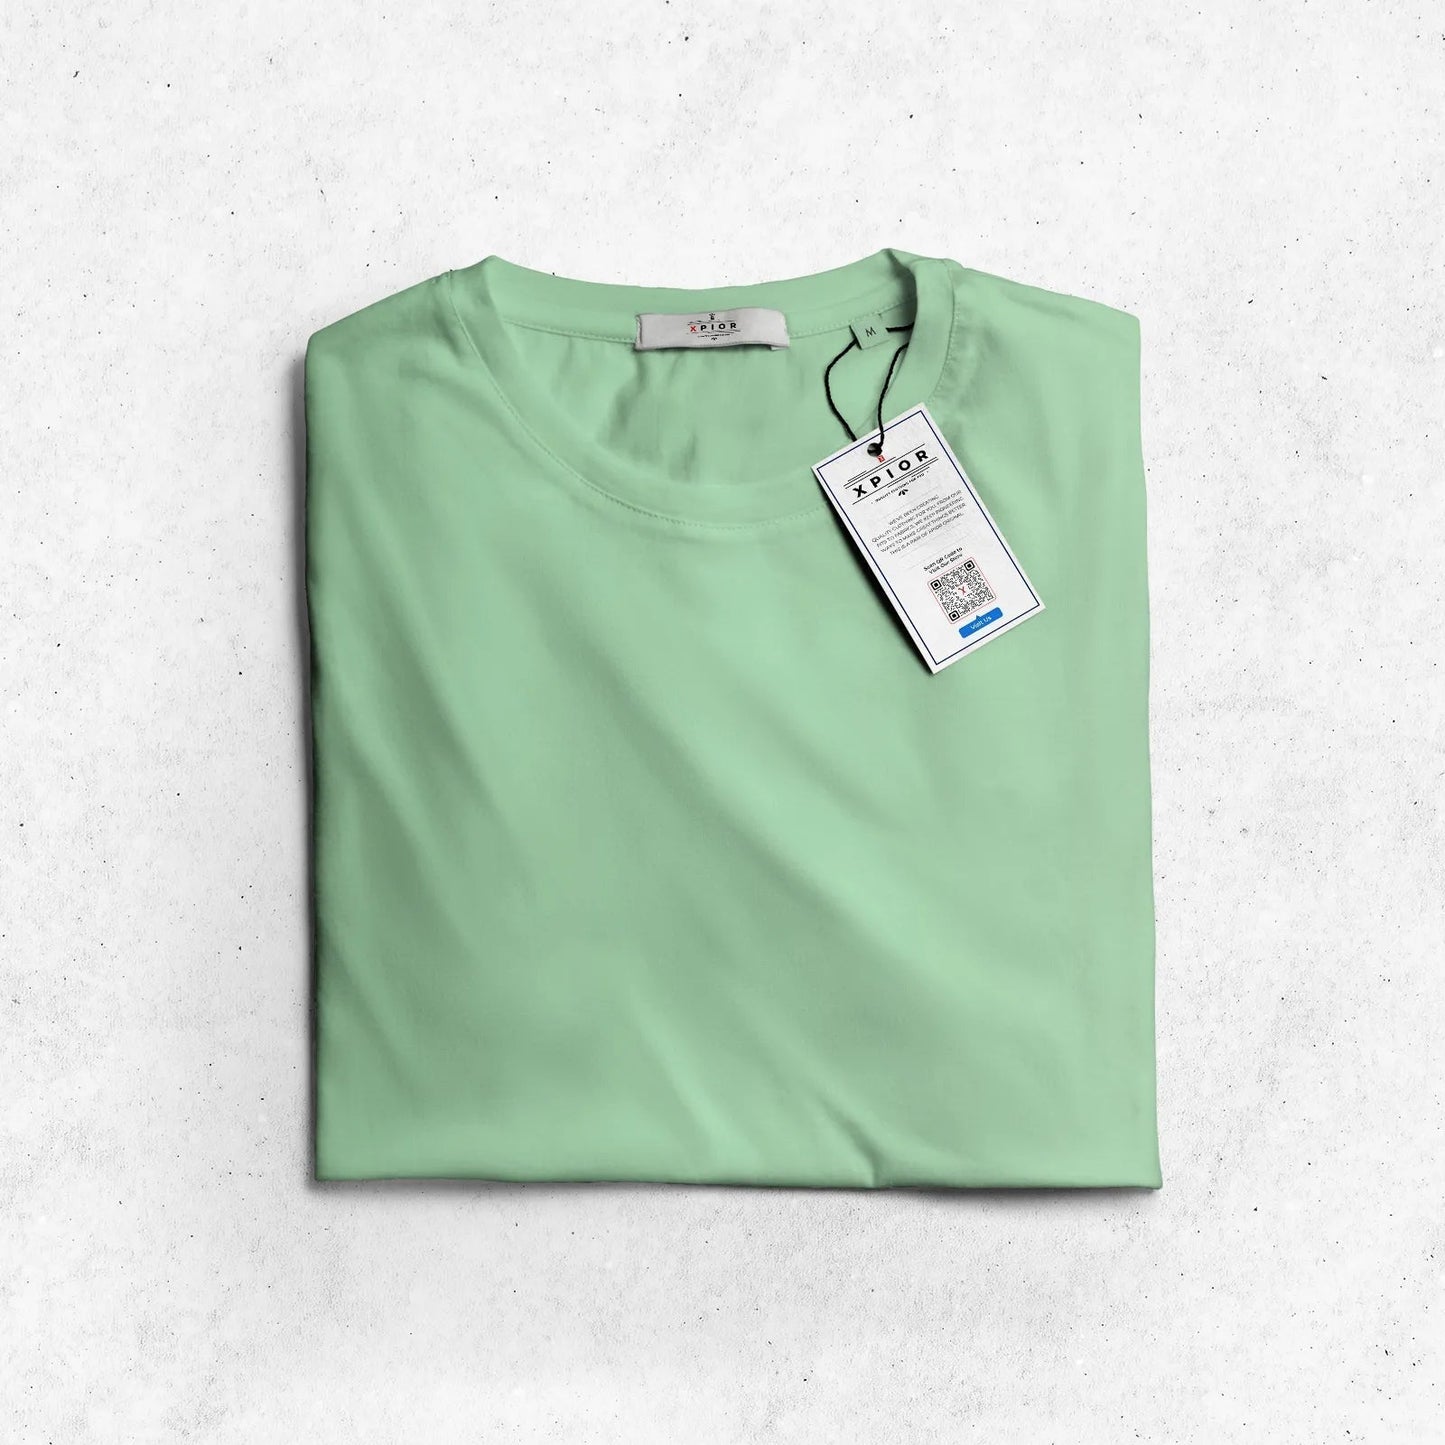 Energetic Half Sleeve Round Neck Green Color Men's Cotton T-Shirt Plain